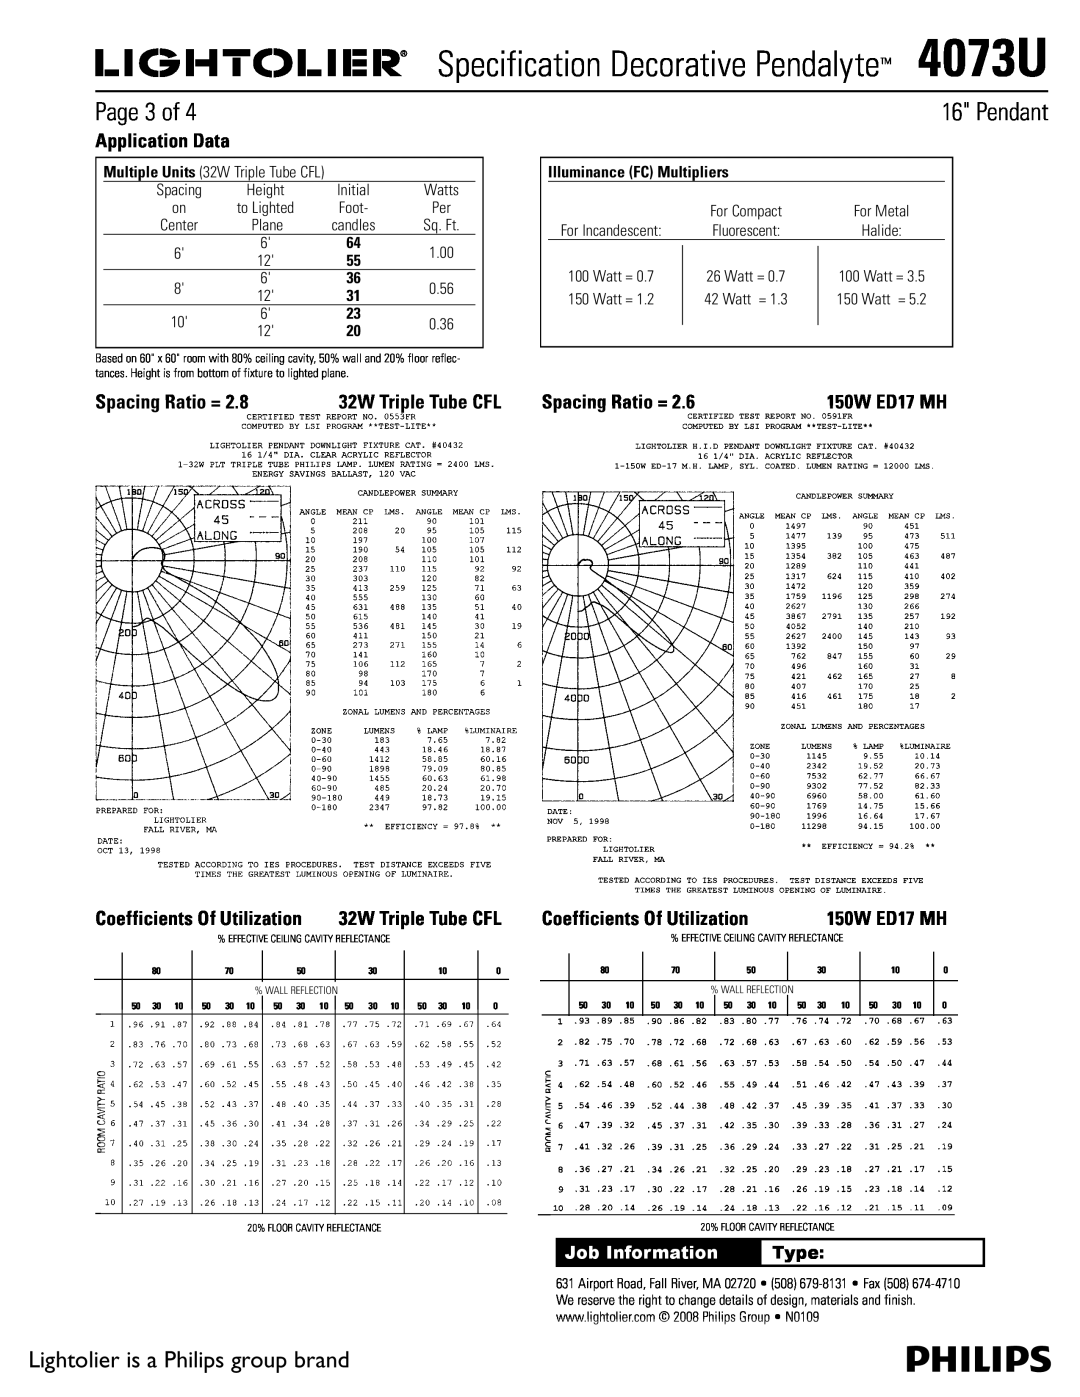 Lightolier 4073U Page 3 of, Application Data, Spacing Ratio =, Coefficients Of Utilization 32W Triple Tube CFL, Plane 